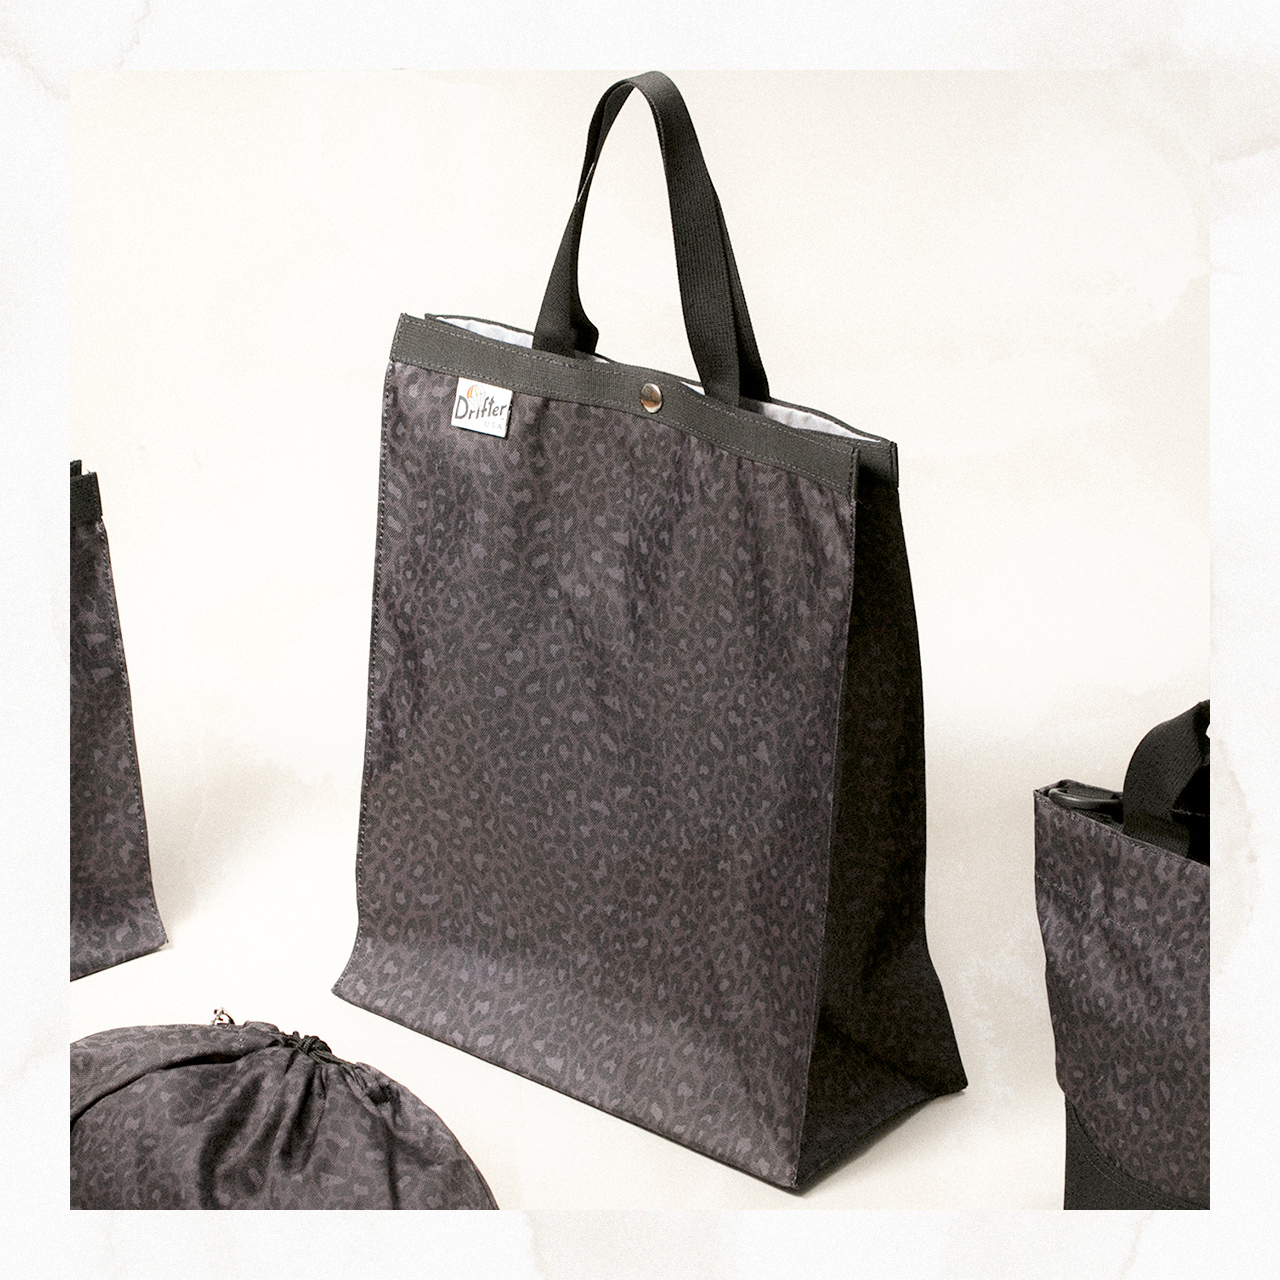 drifter-paper-bag-tote-l-black-leopard